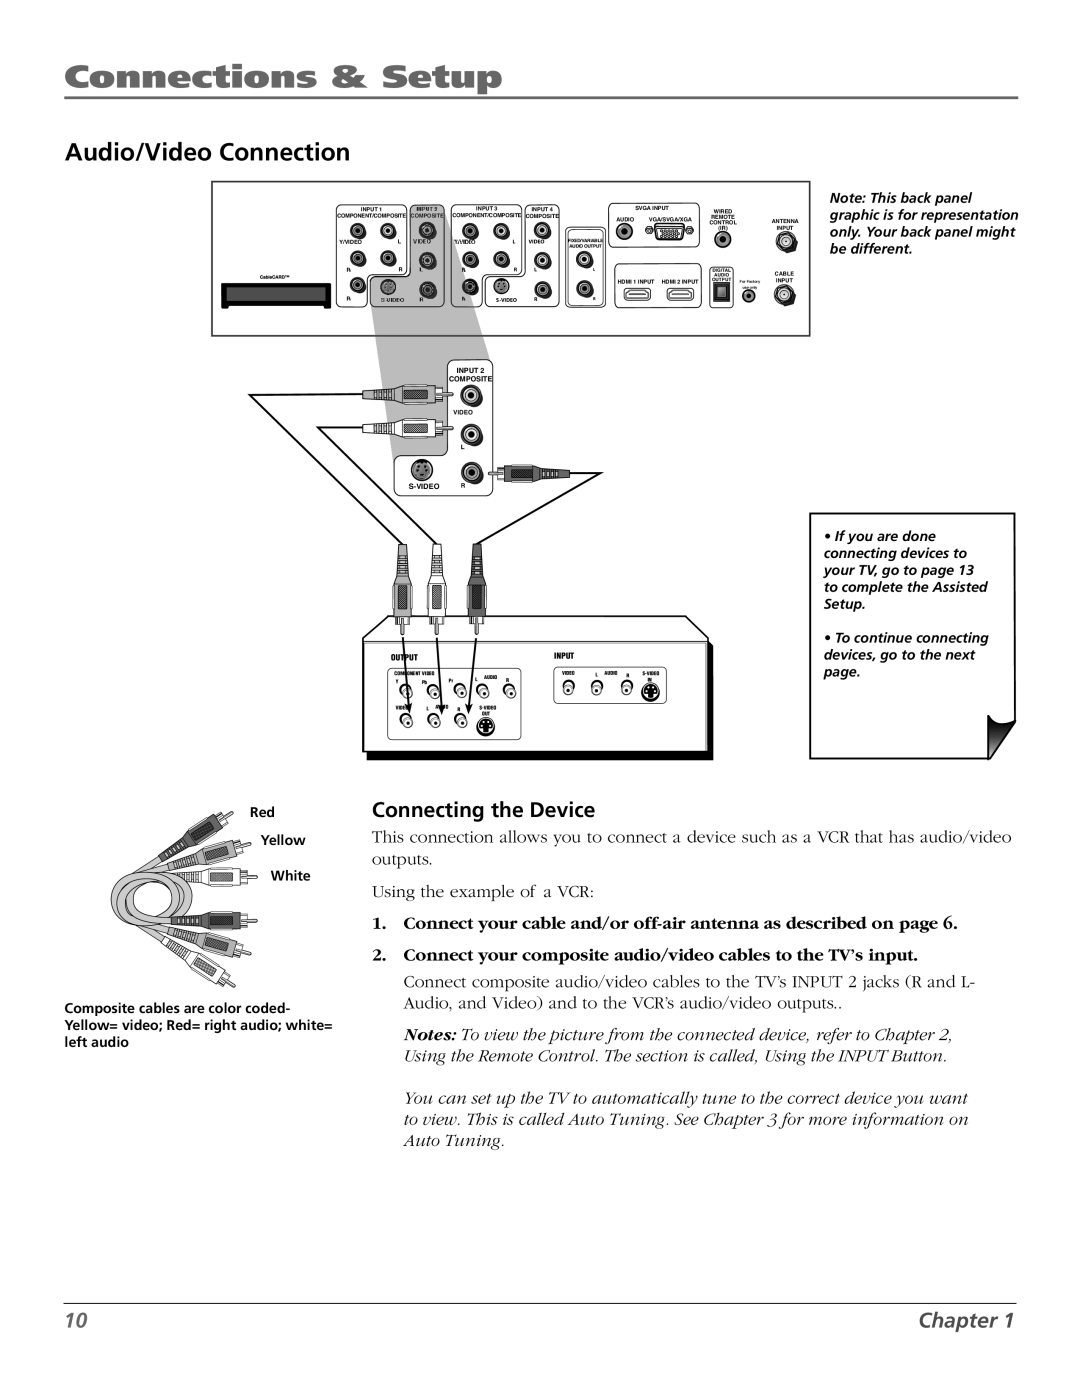 RCA M50WH187 manual Audio/Video Connection, Composite 